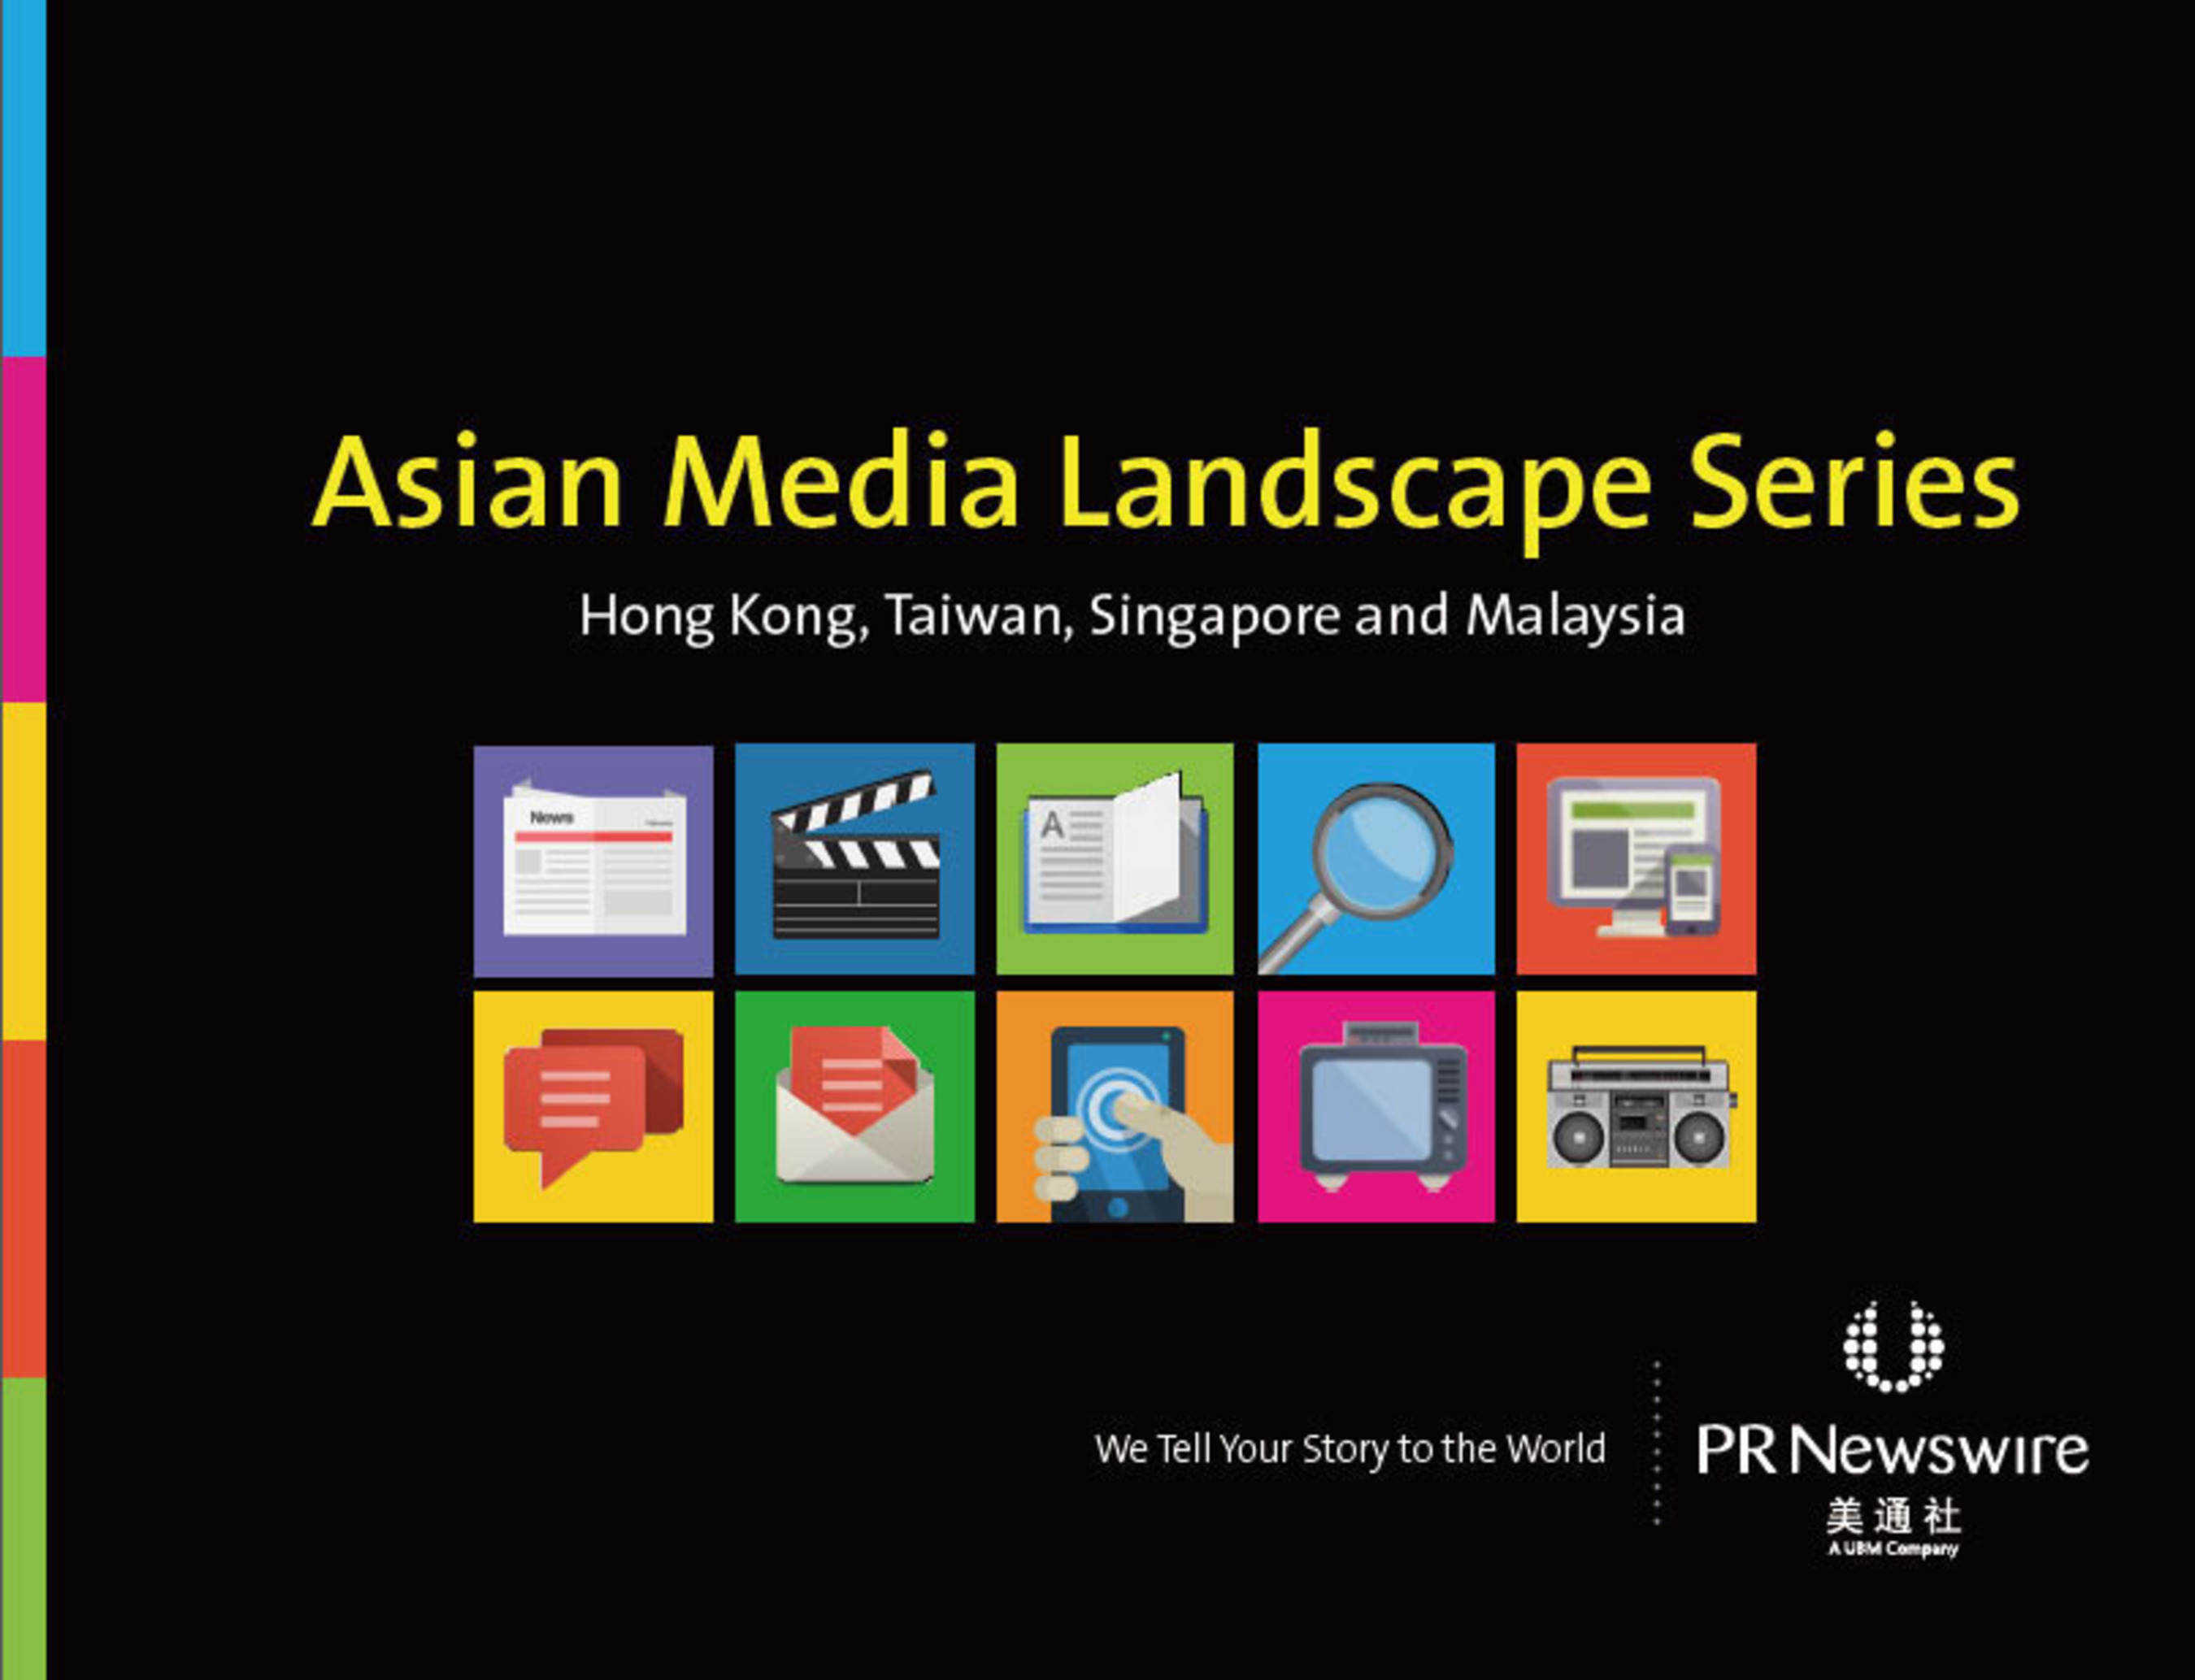 PR Newswire Issues Asian Media Landscape Series White Paper. (PRNewsFoto/PR Newswire)